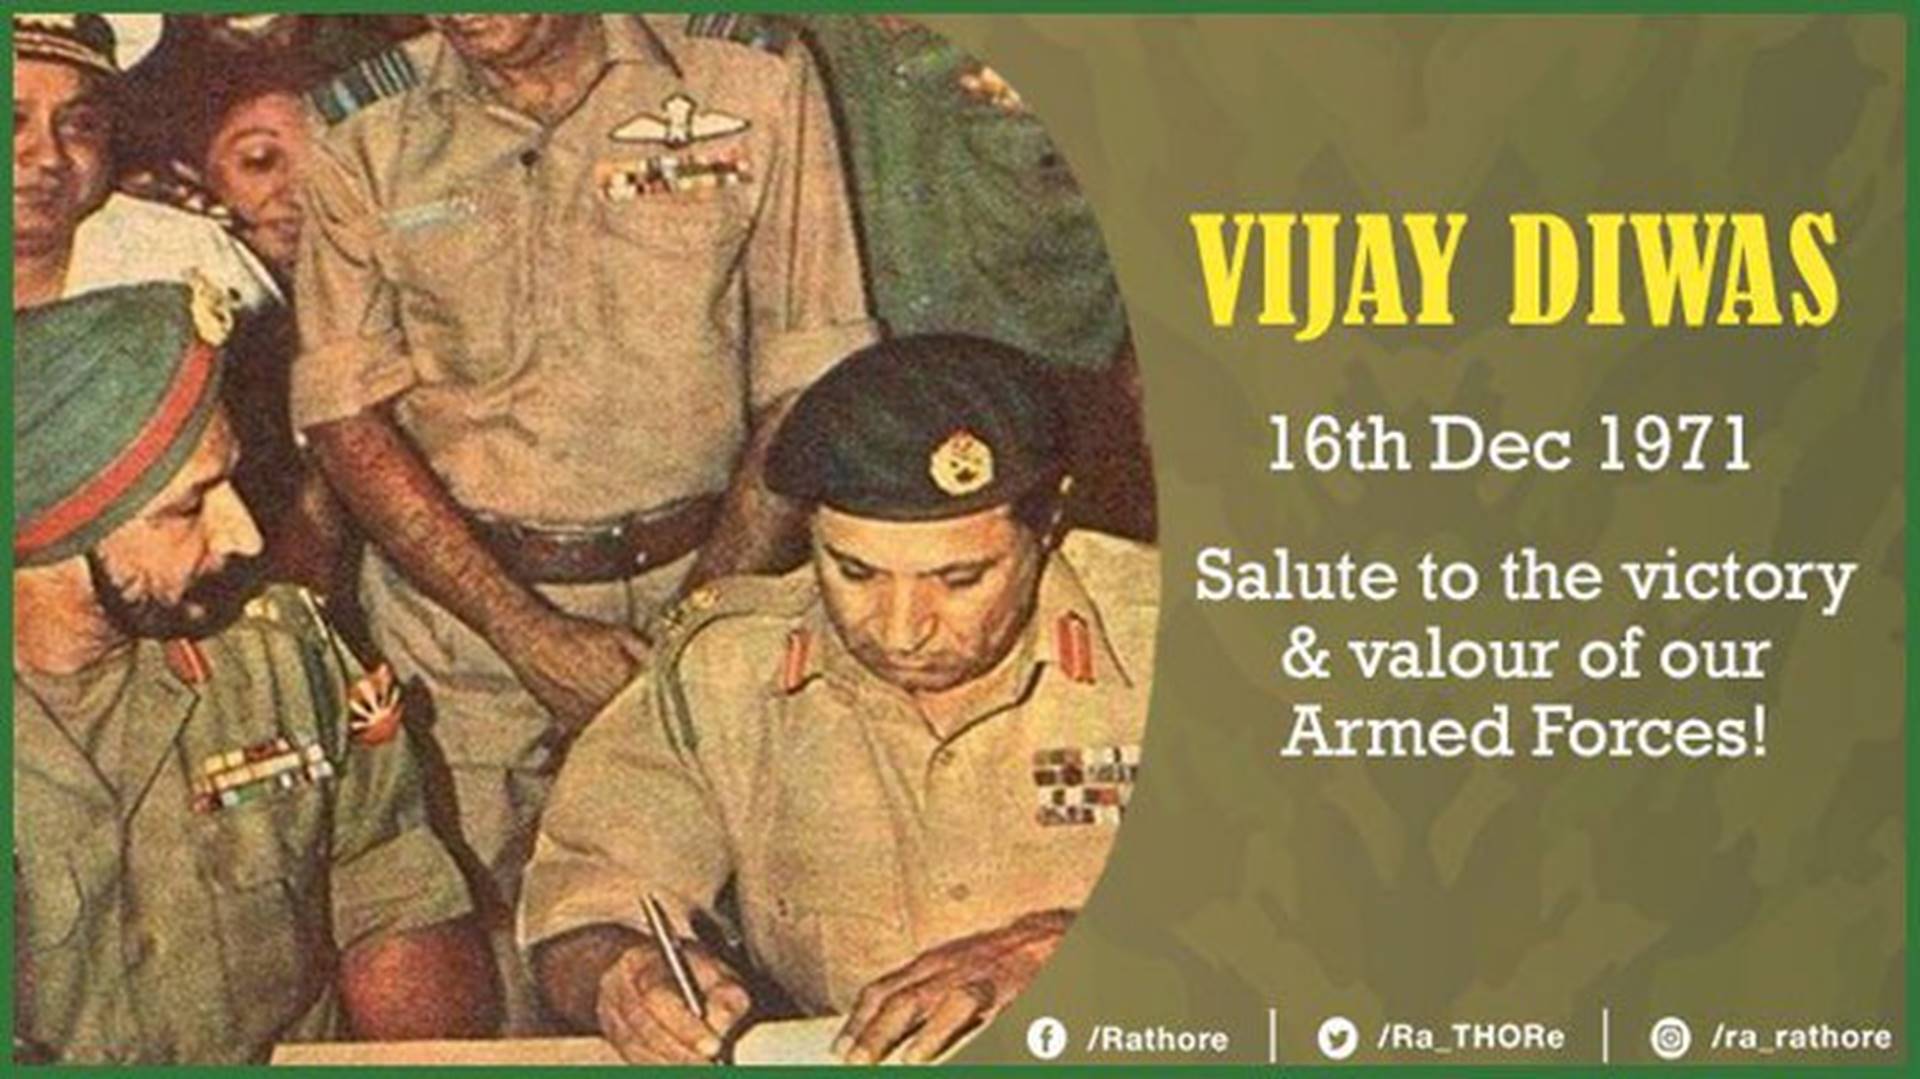 Vijay Diwas : 16 December, Indiva’s victory over Pakistan